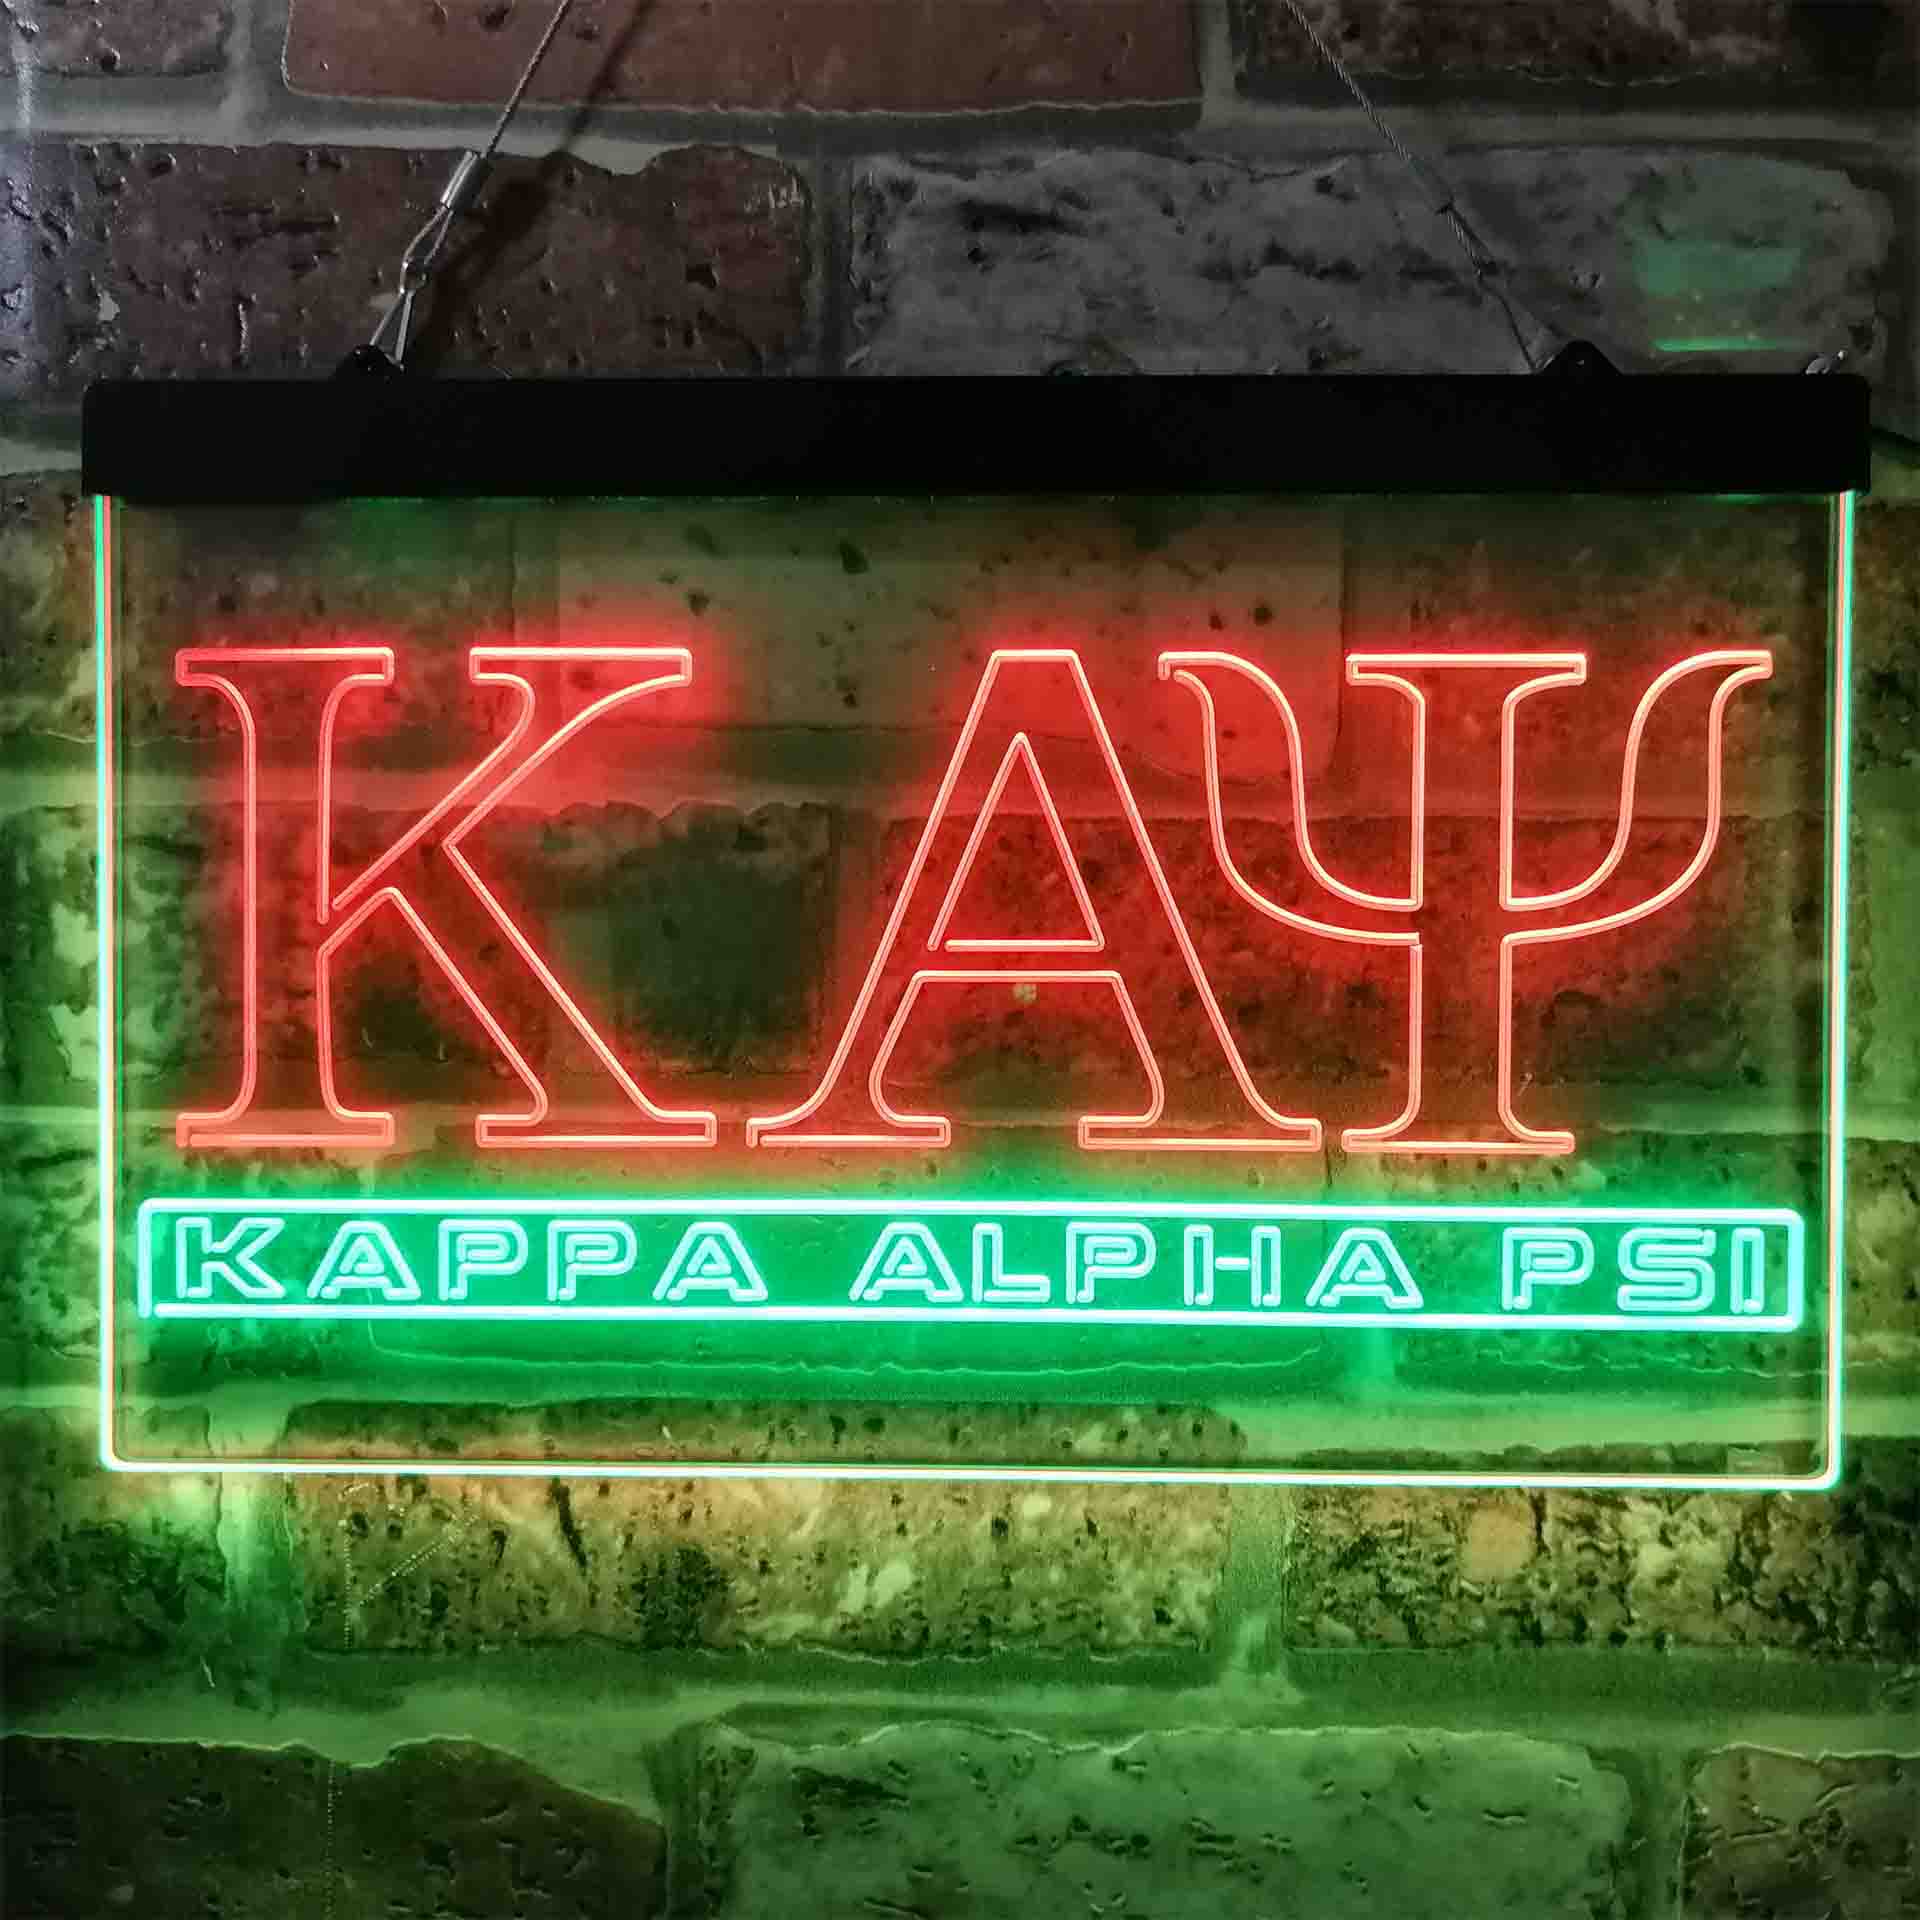 The Kappa Alpha Psi Fraternity Greek Letter Organization Neon-Like LED Sign